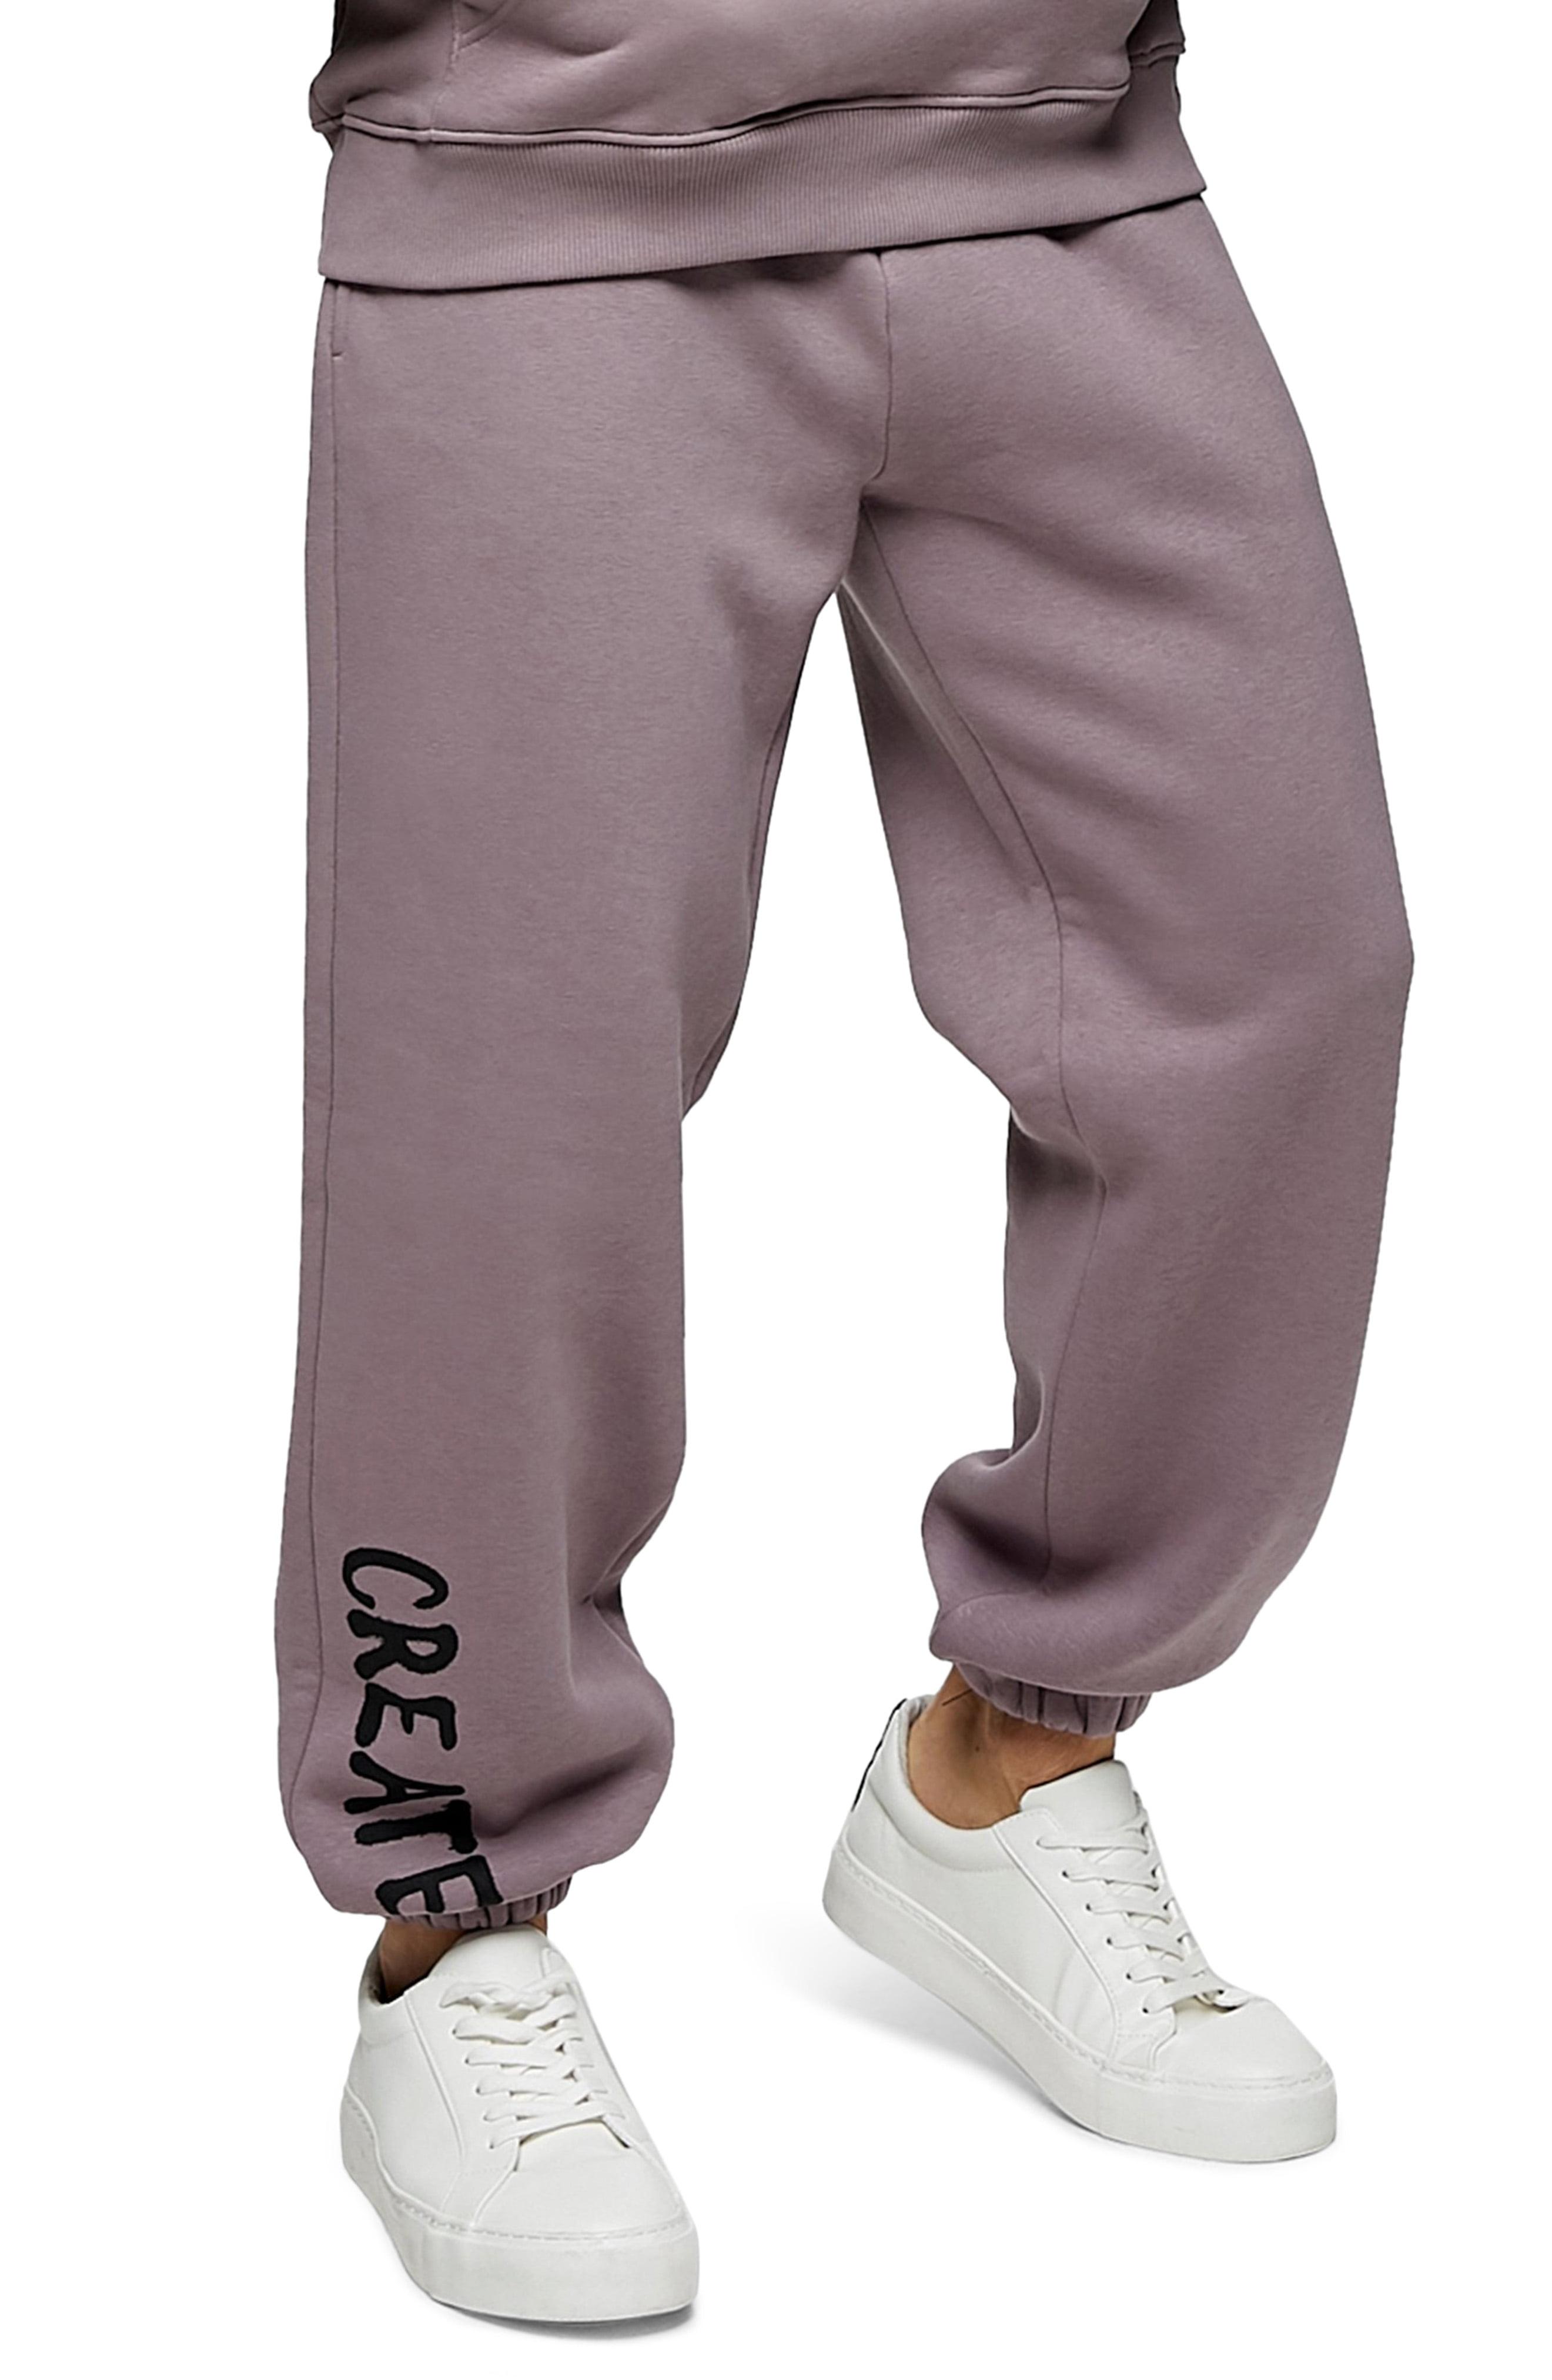 TOPMAN Cotton Create Graphic Jogger Sweatpants in Purple for Men - Lyst